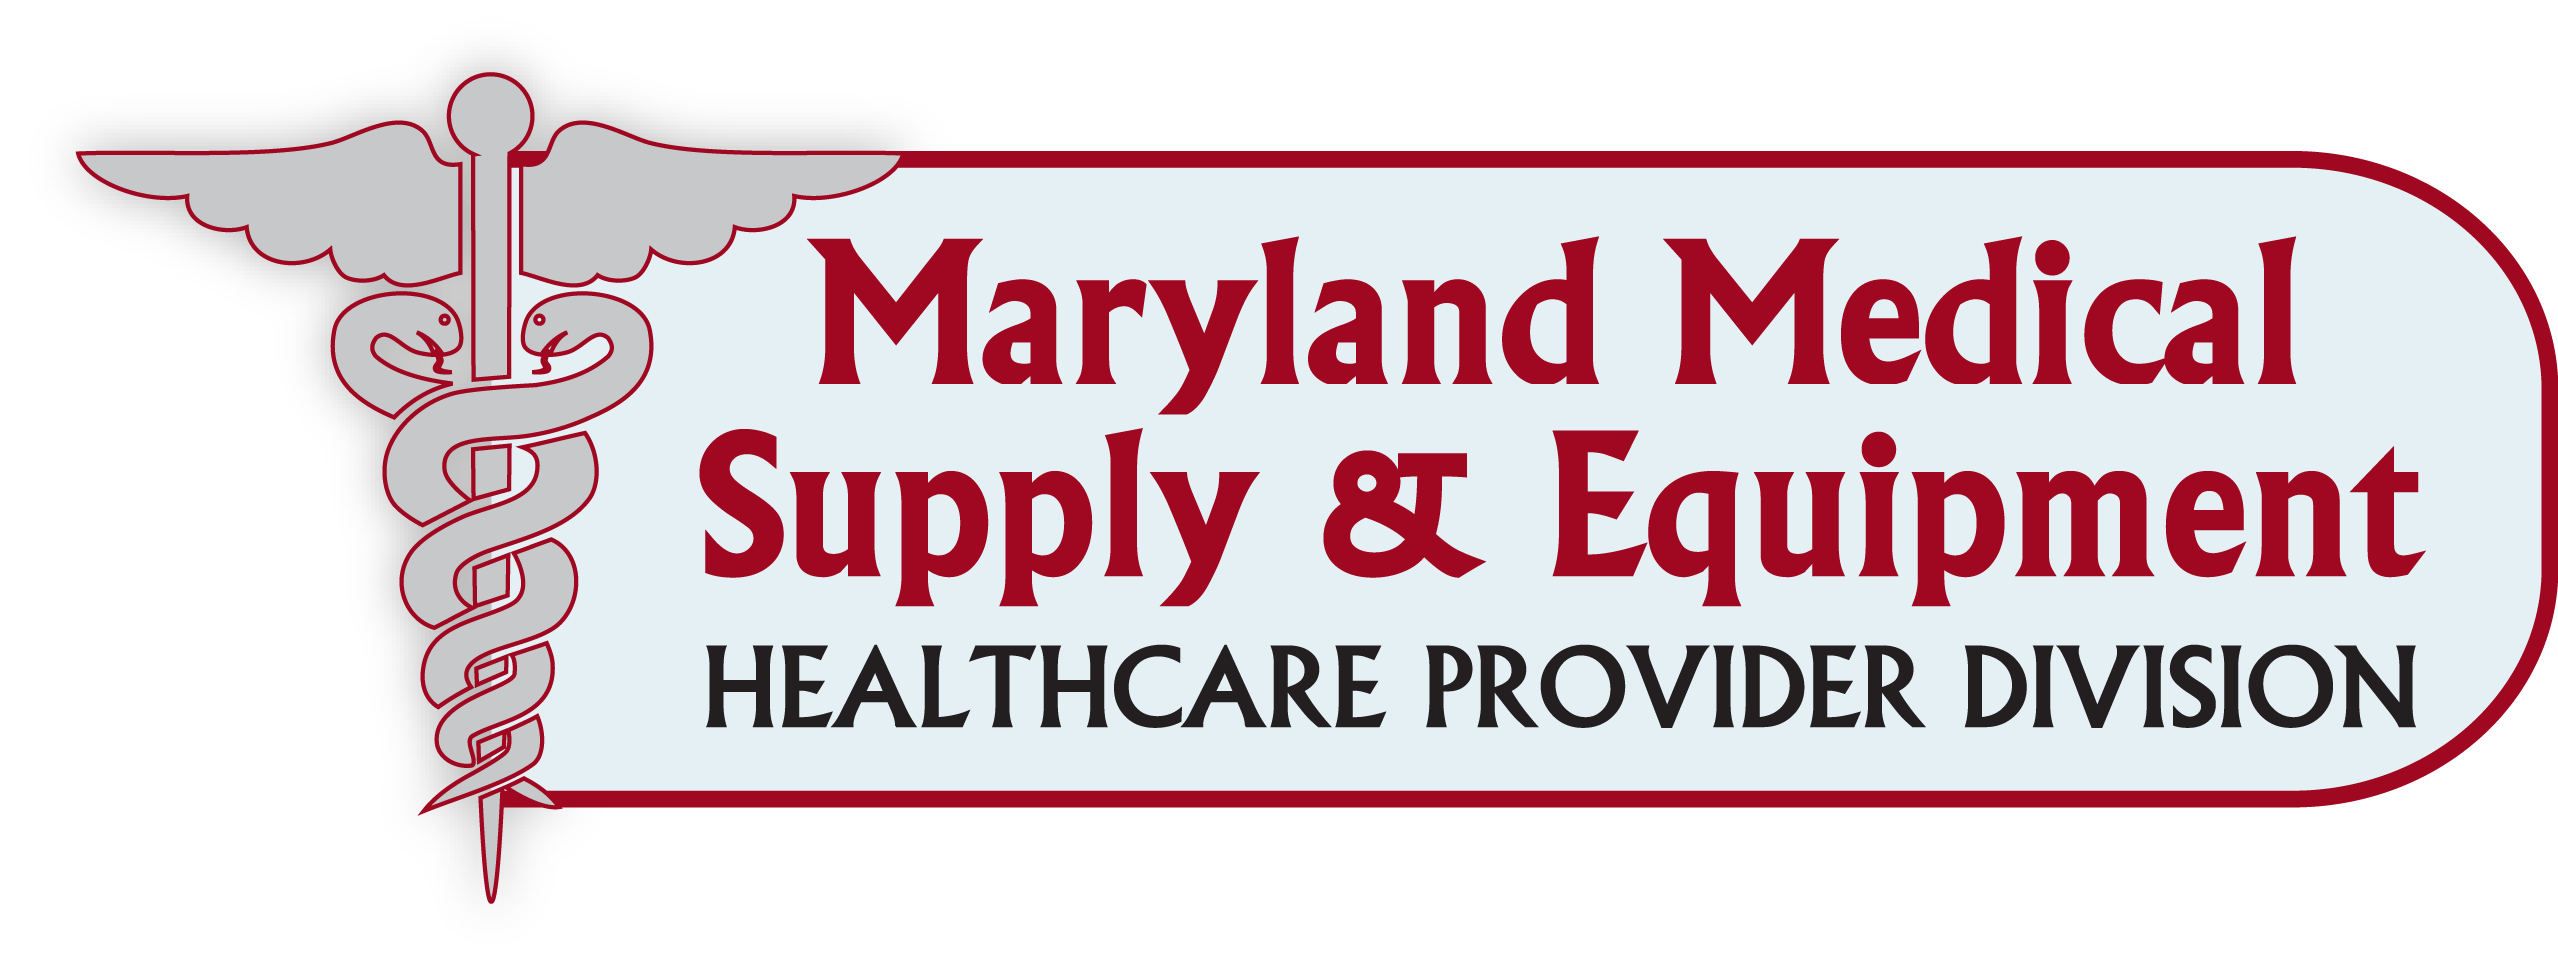 Maryland Medical Supply & Equipment